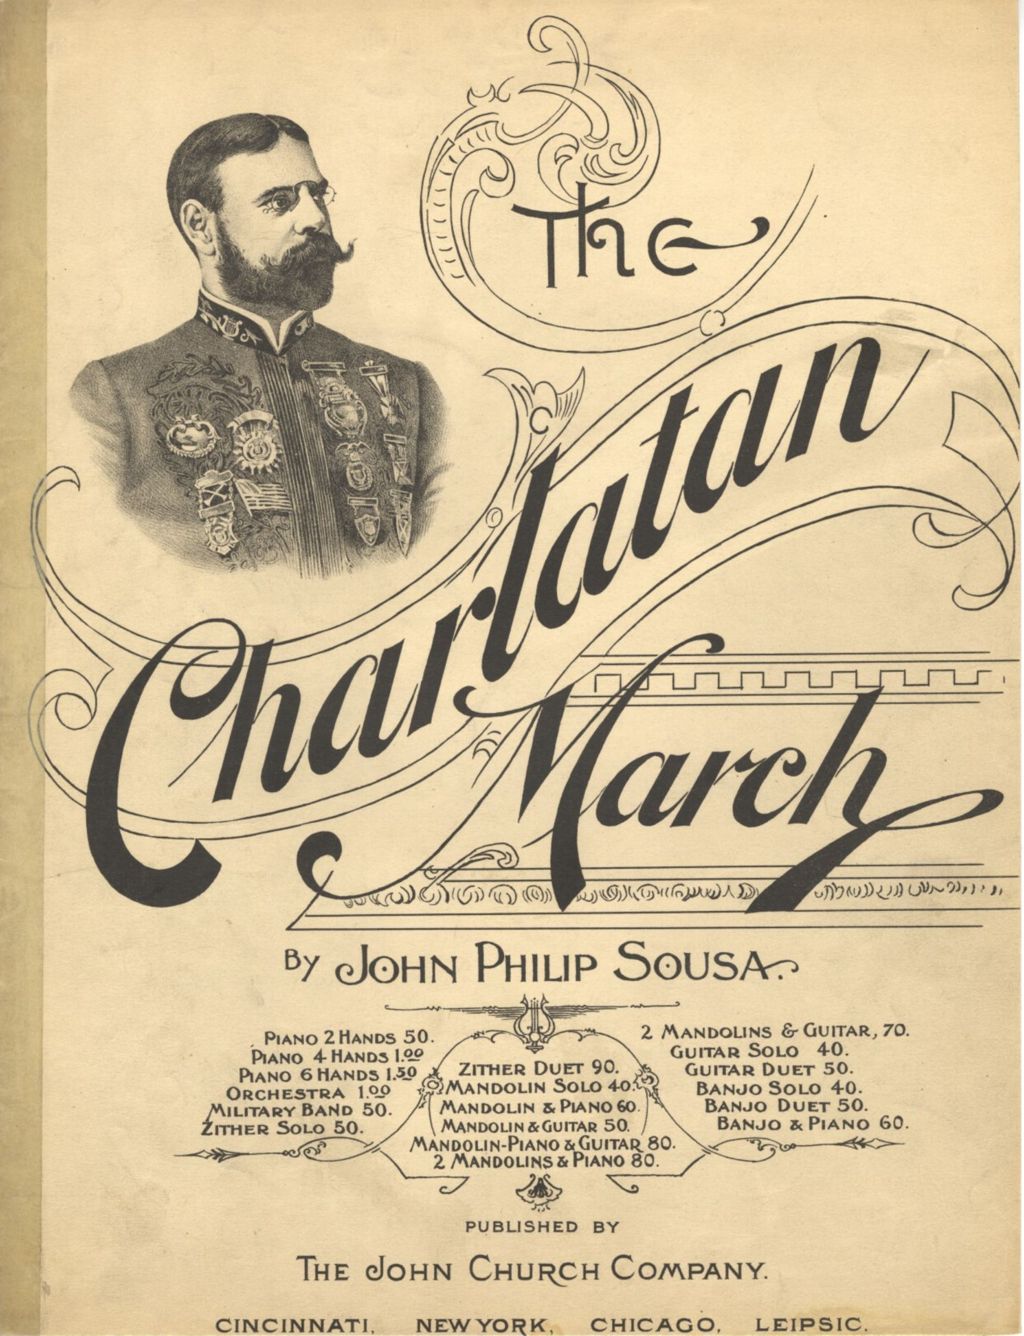 The Charlatan March